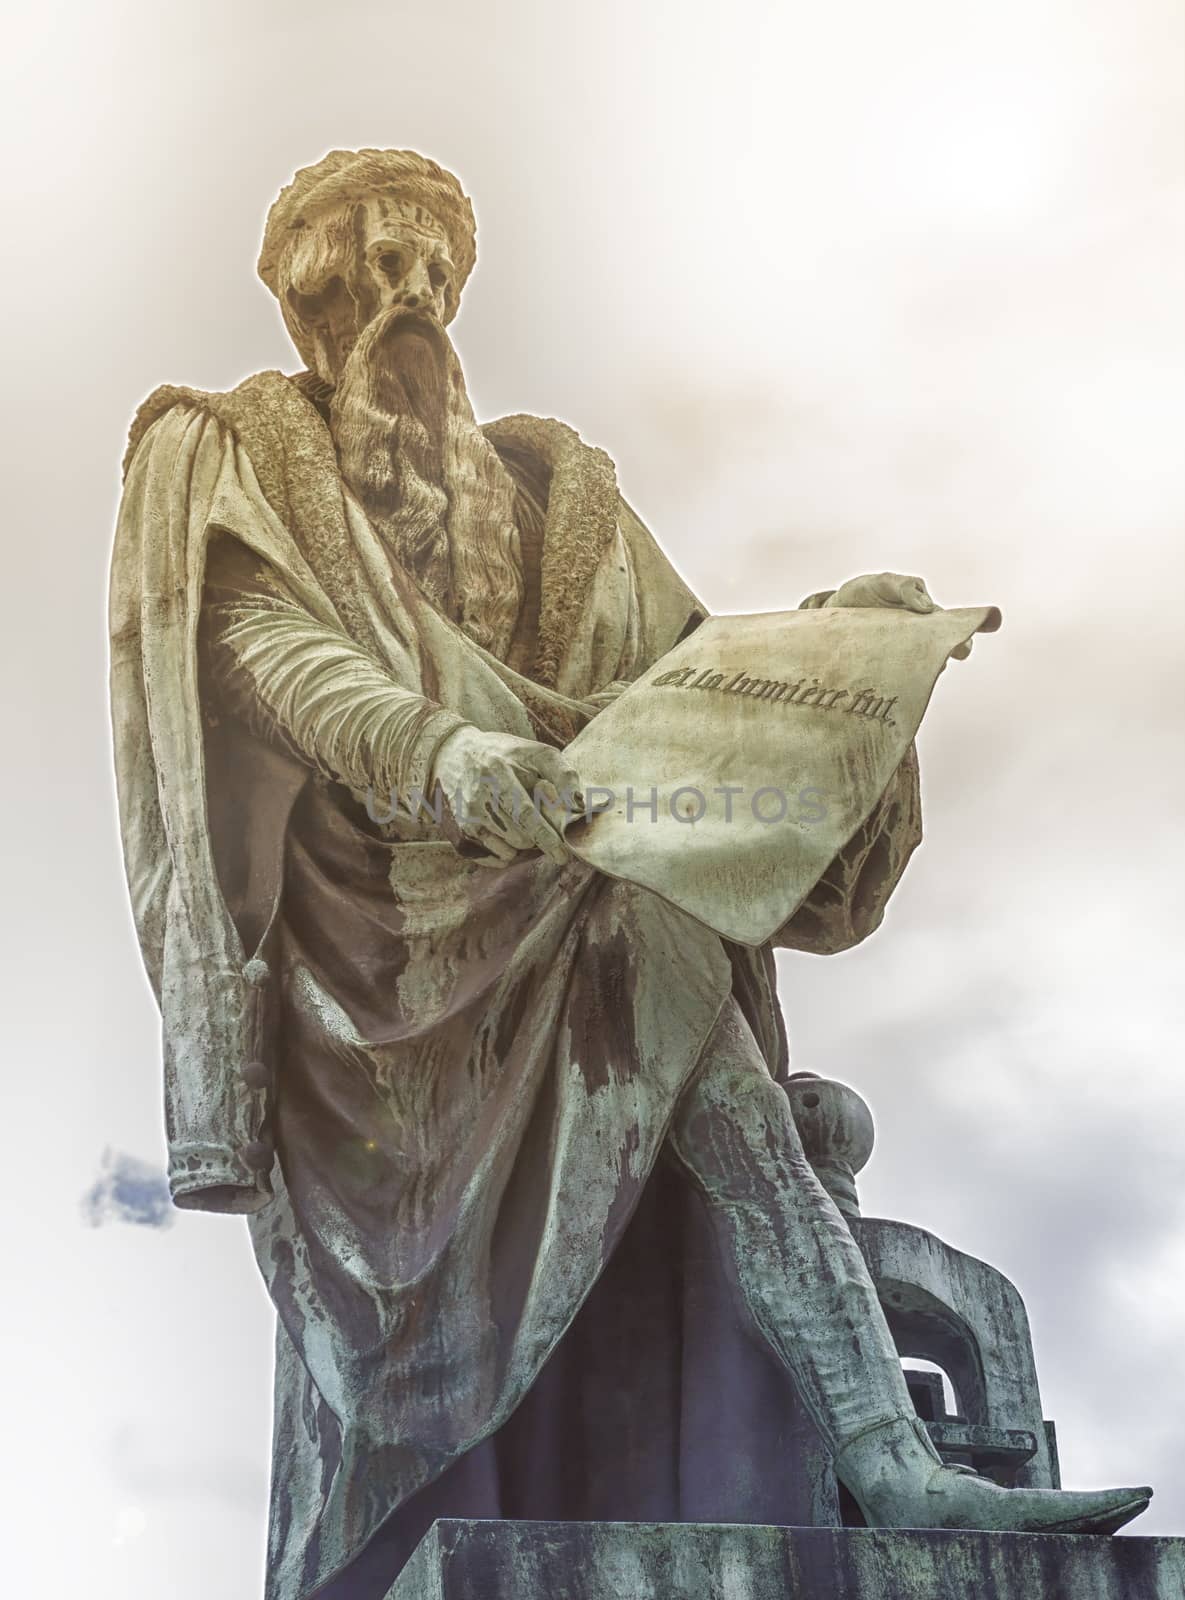 Johannes Gutenberg statue, Strasbourg, France by Elenaphotos21